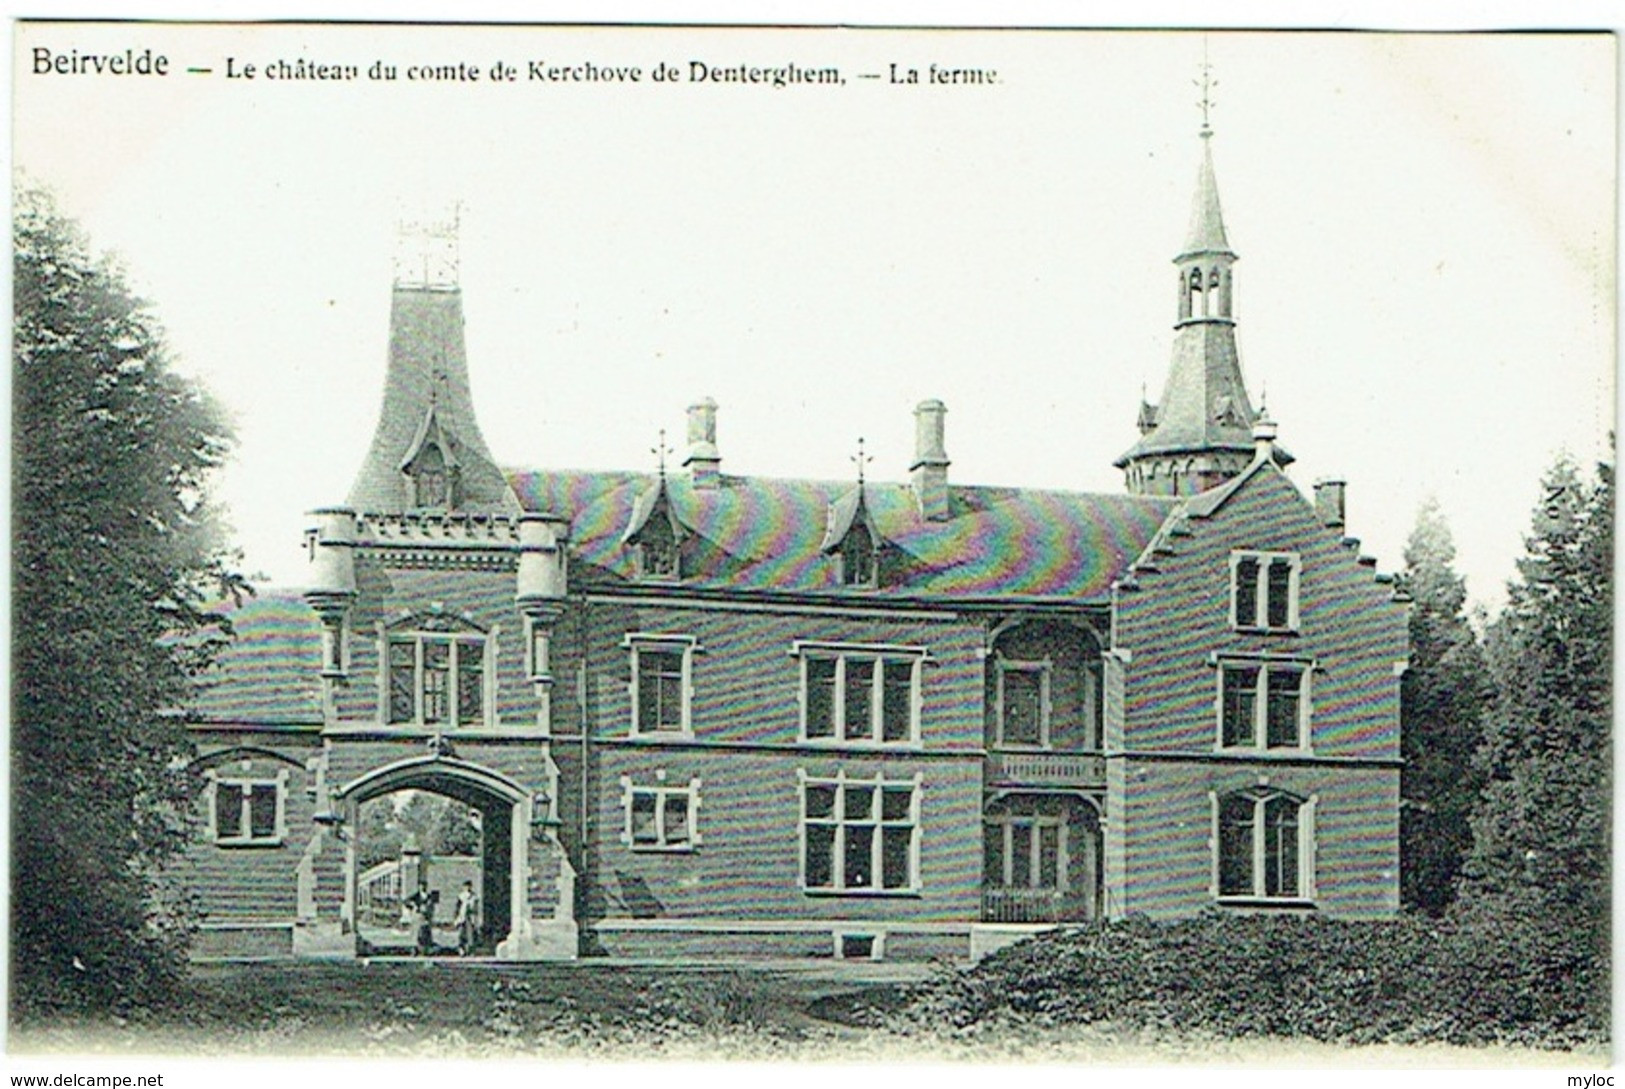 Beirvelde. Château Du Comte De Kerchove De Denterghem.  La Ferme. - Lochristi